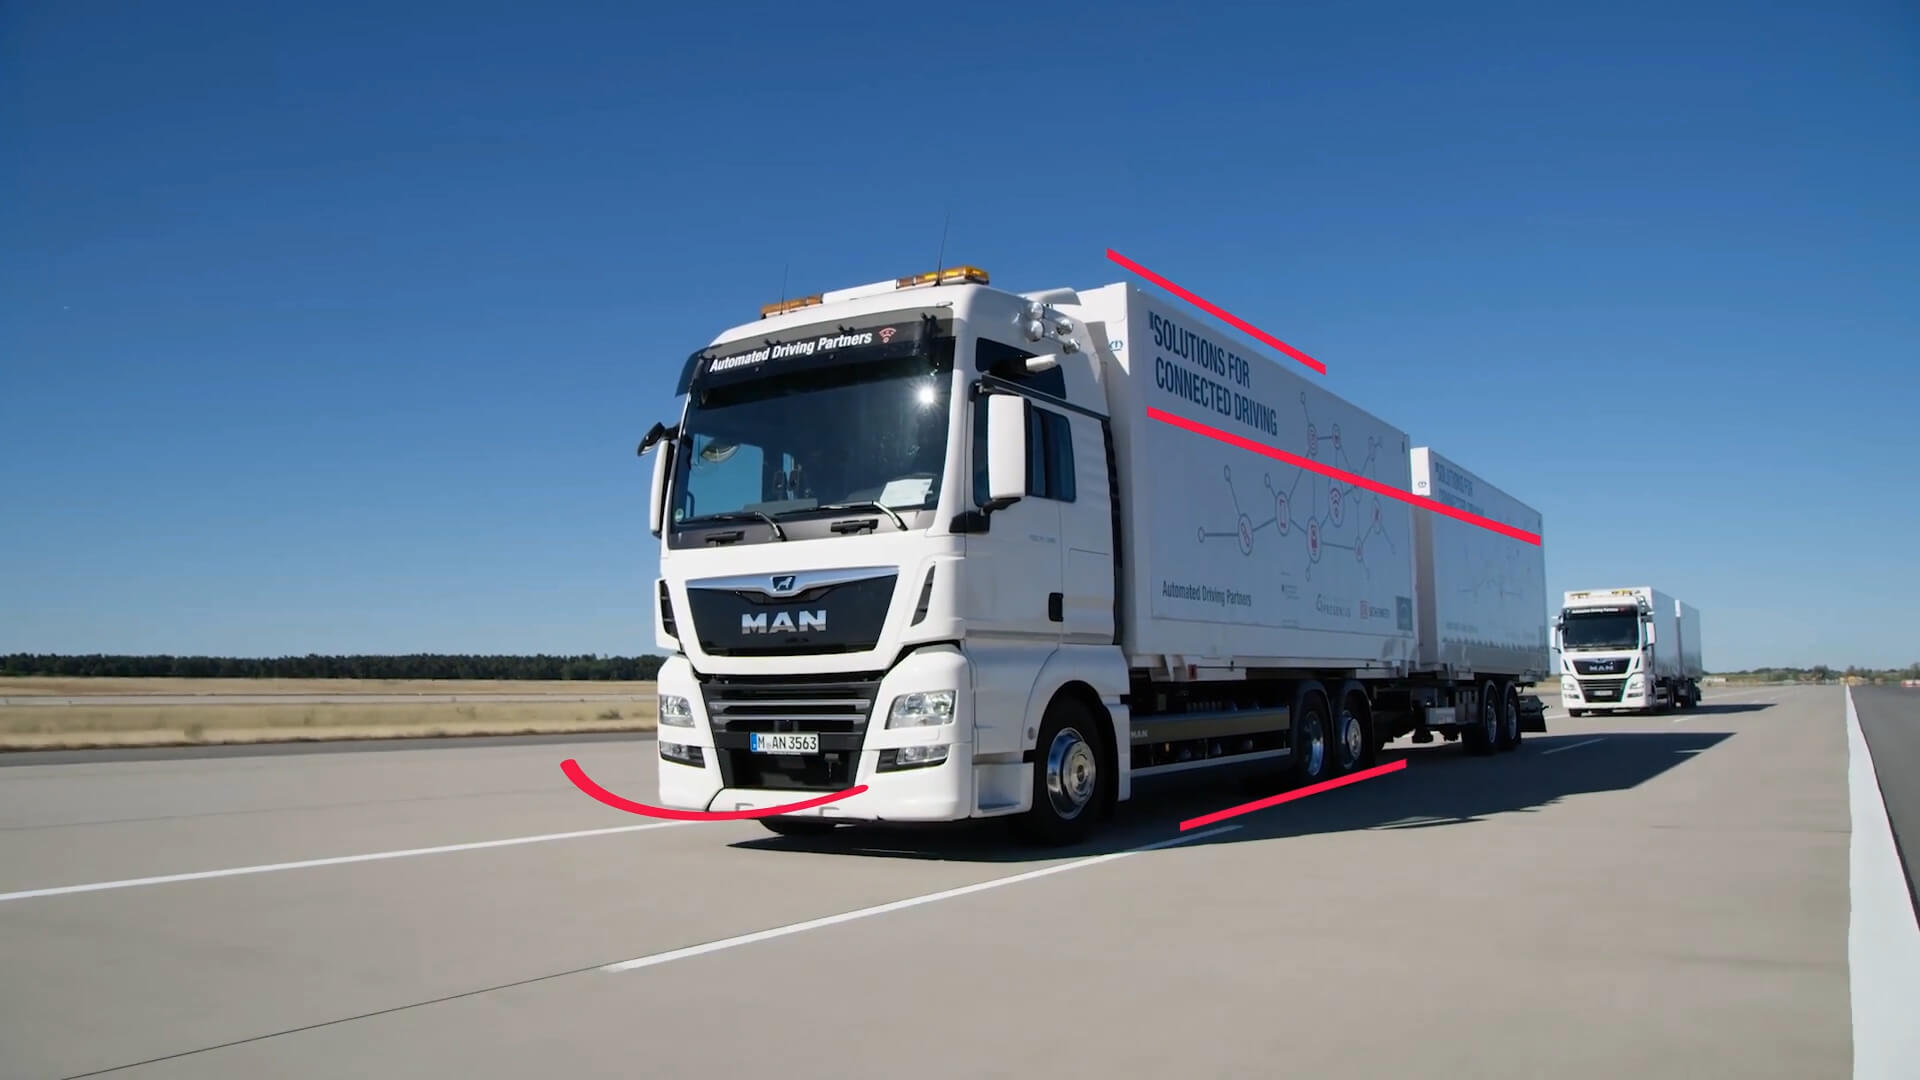 MAN autonomous trucks